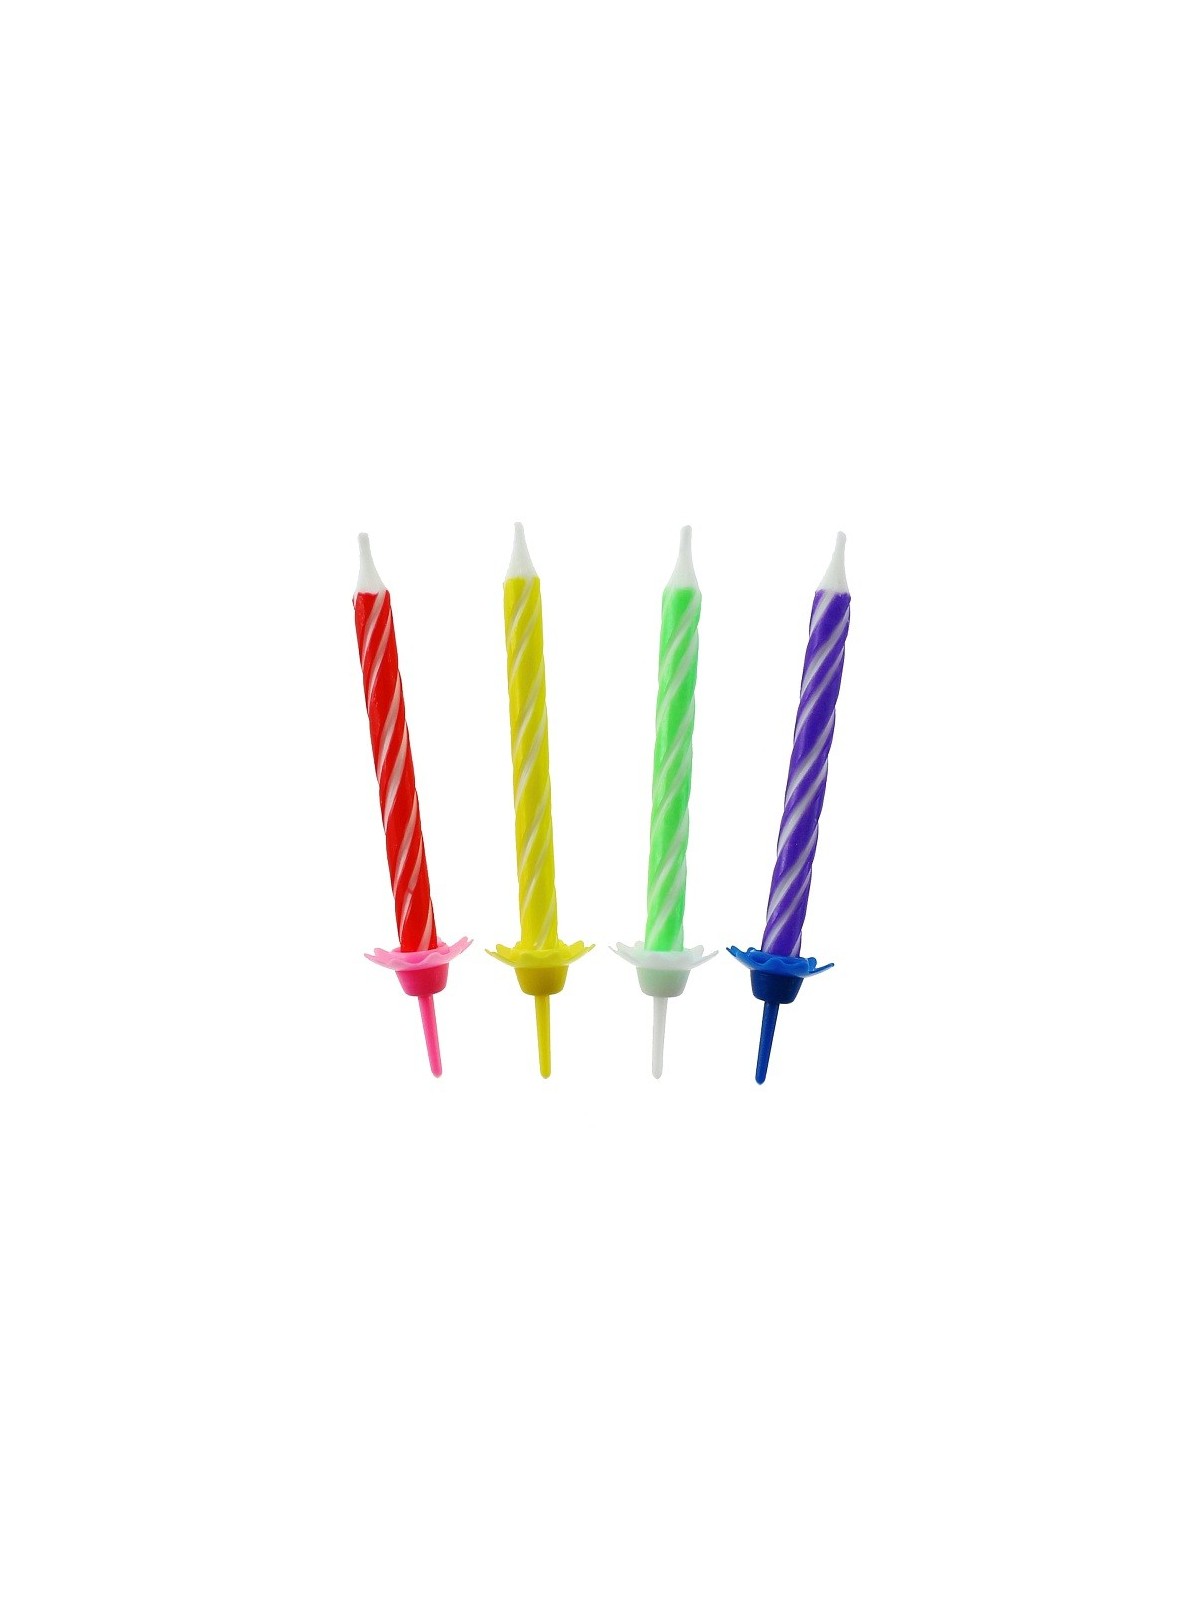 copy of Birthday candles - spiral narrow - 24pcs / 6cm